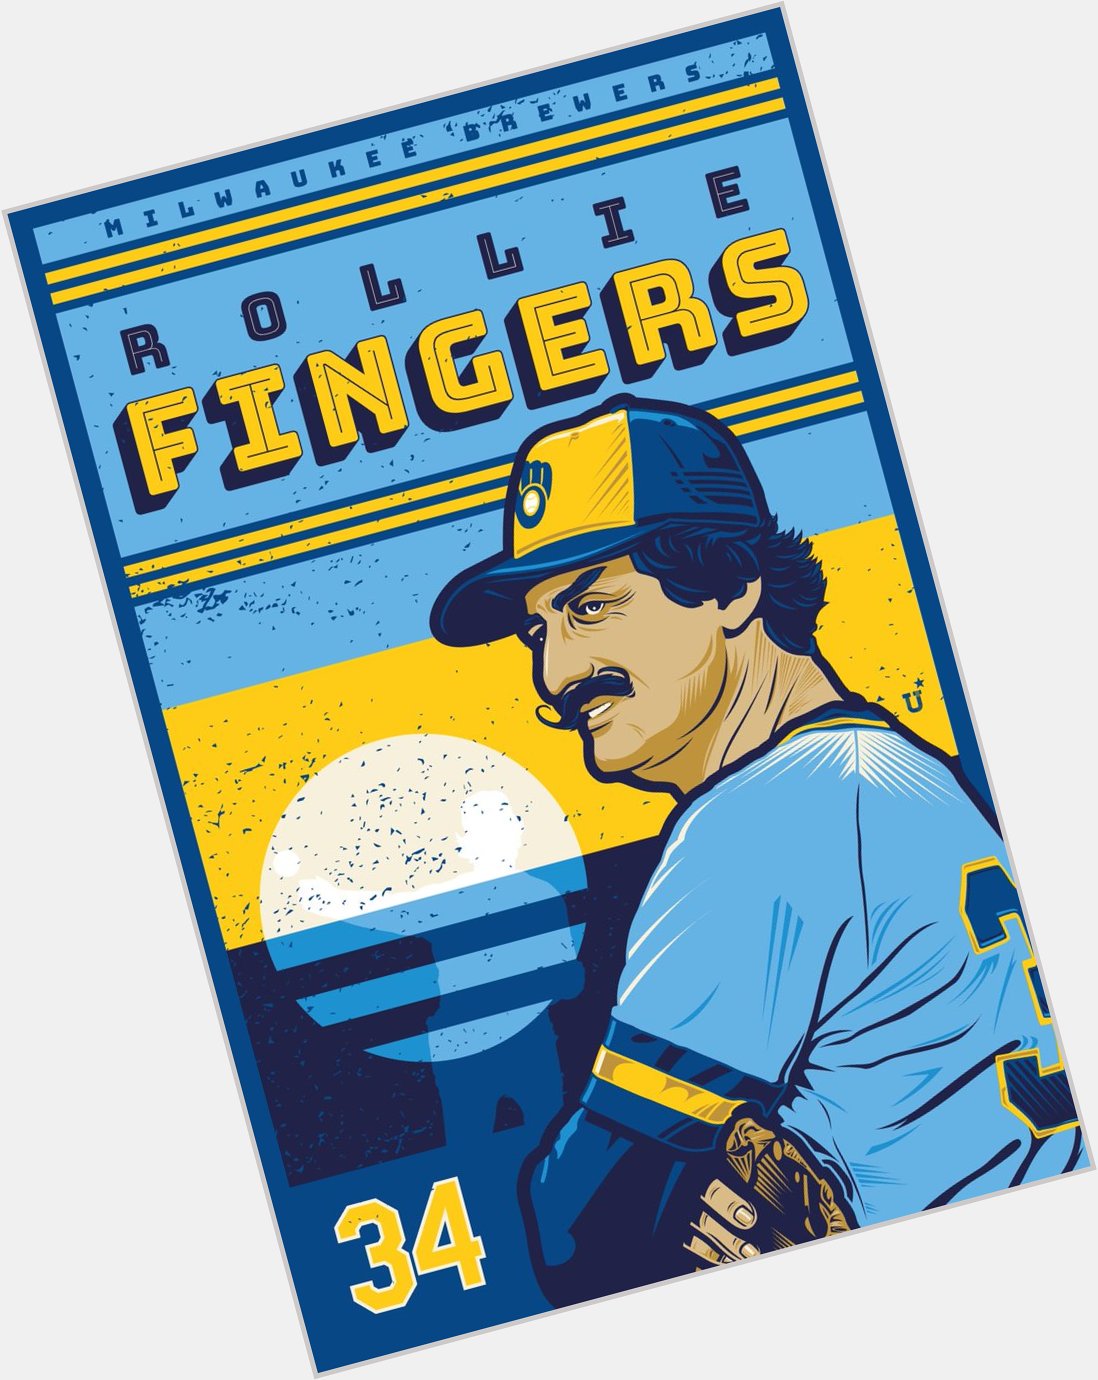 Happy Birthday to MLB closer and mustache afficionado Rollie Fingers.  